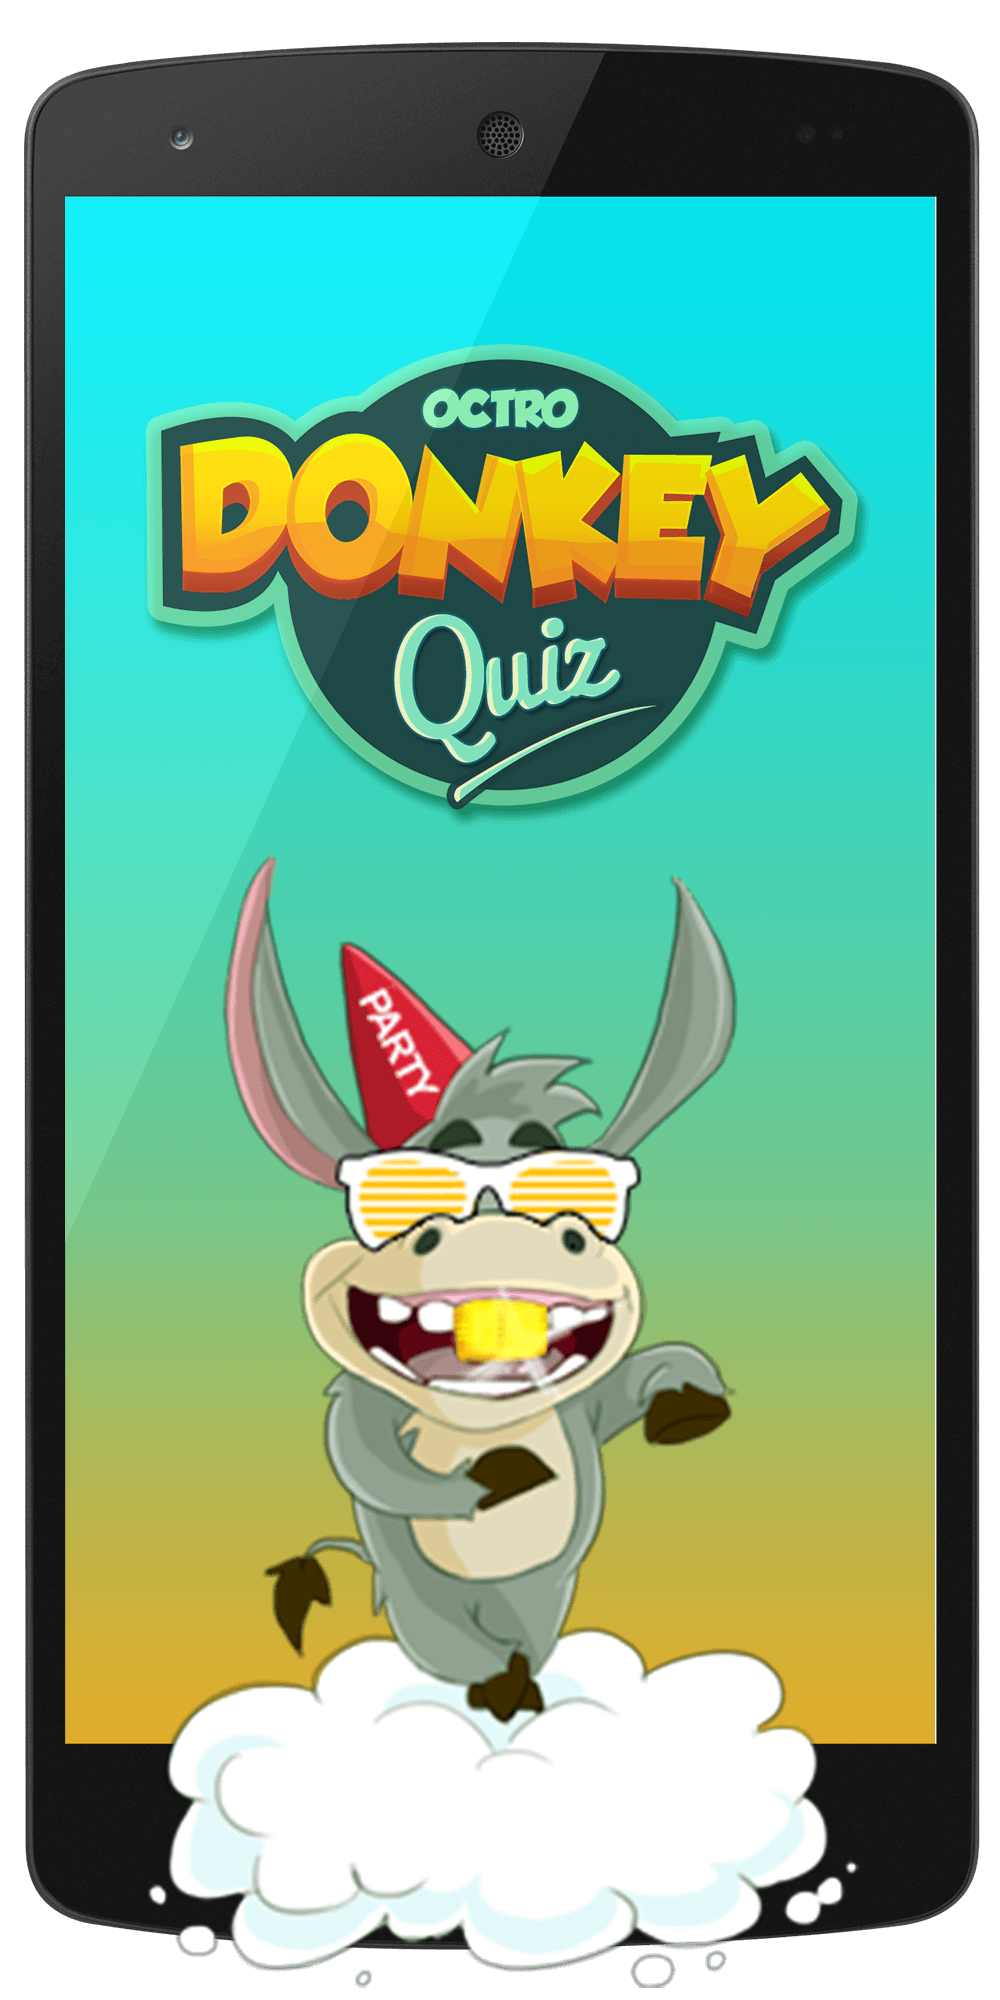 Donkey Quiz Game From Octro